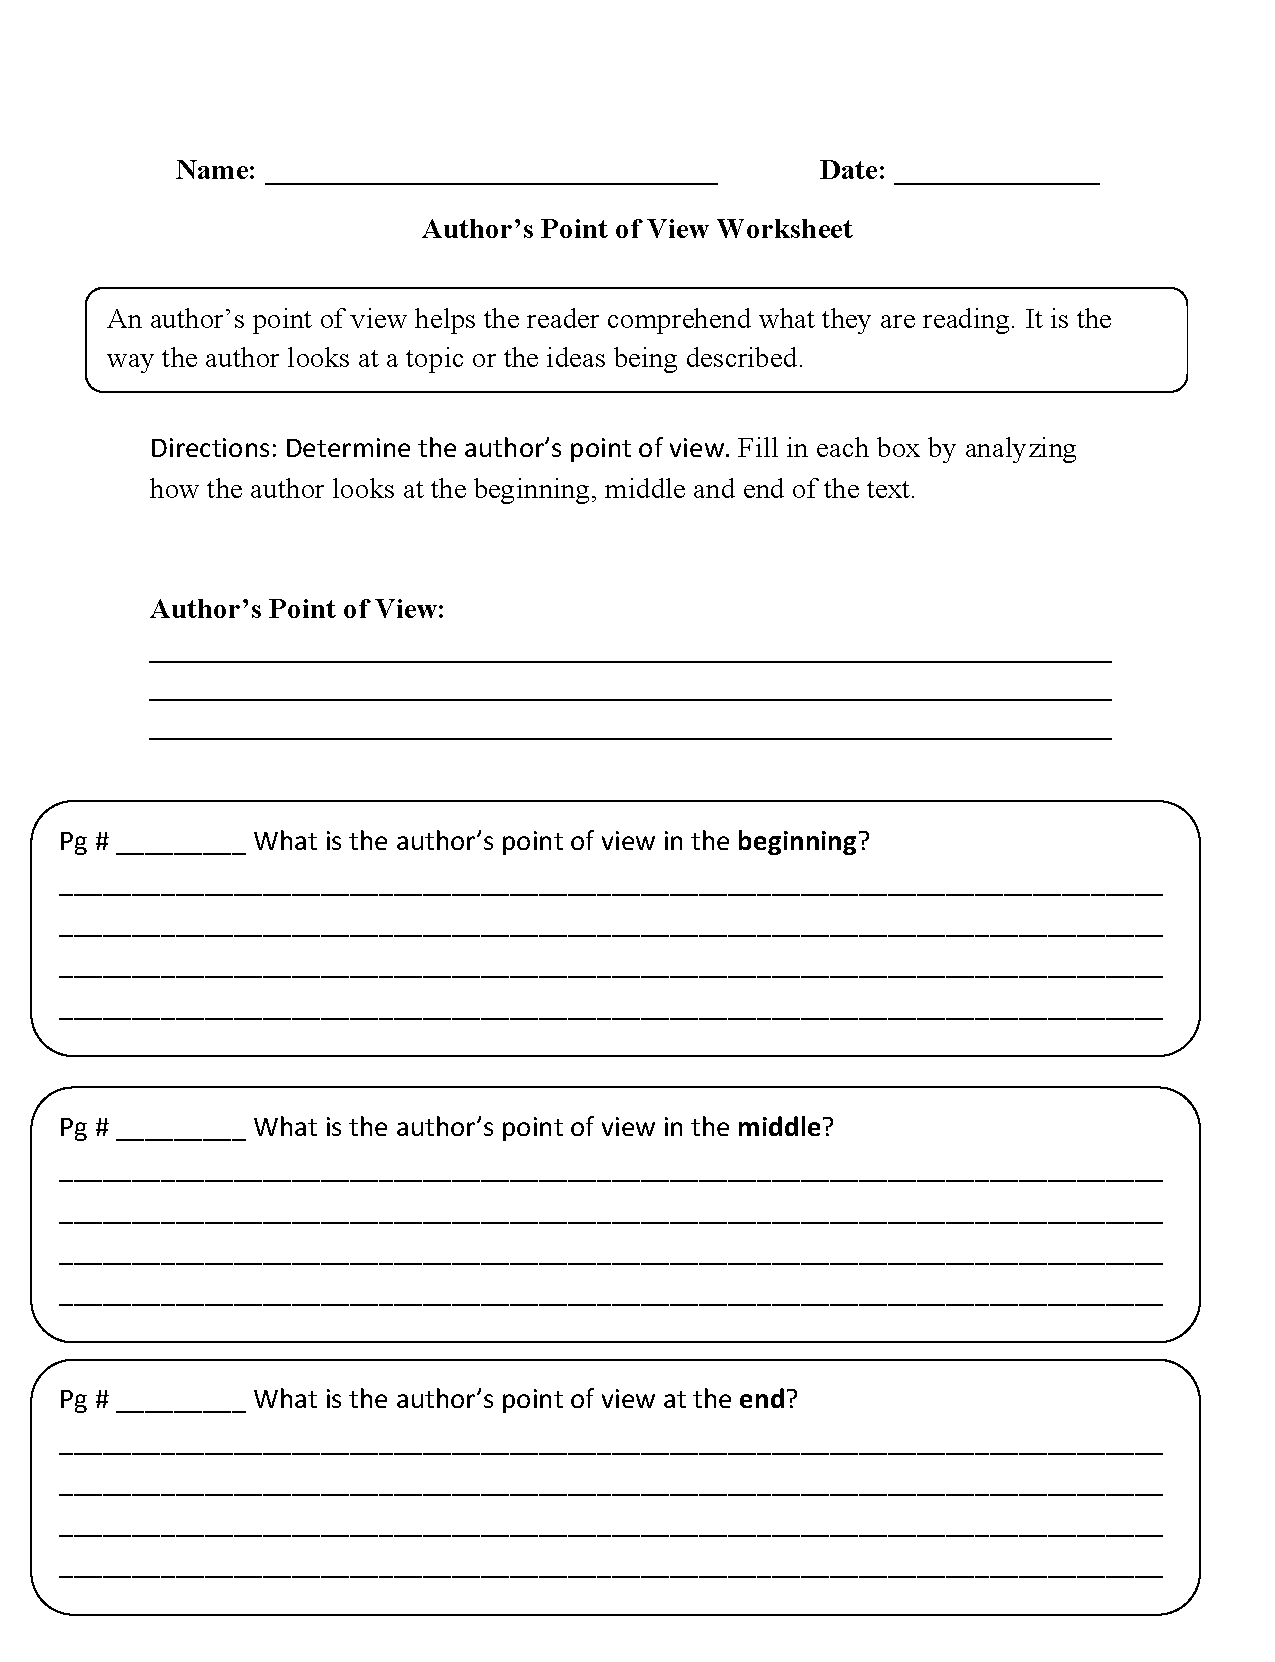 Third Grade (Grade 3) Opinion Writing Questions